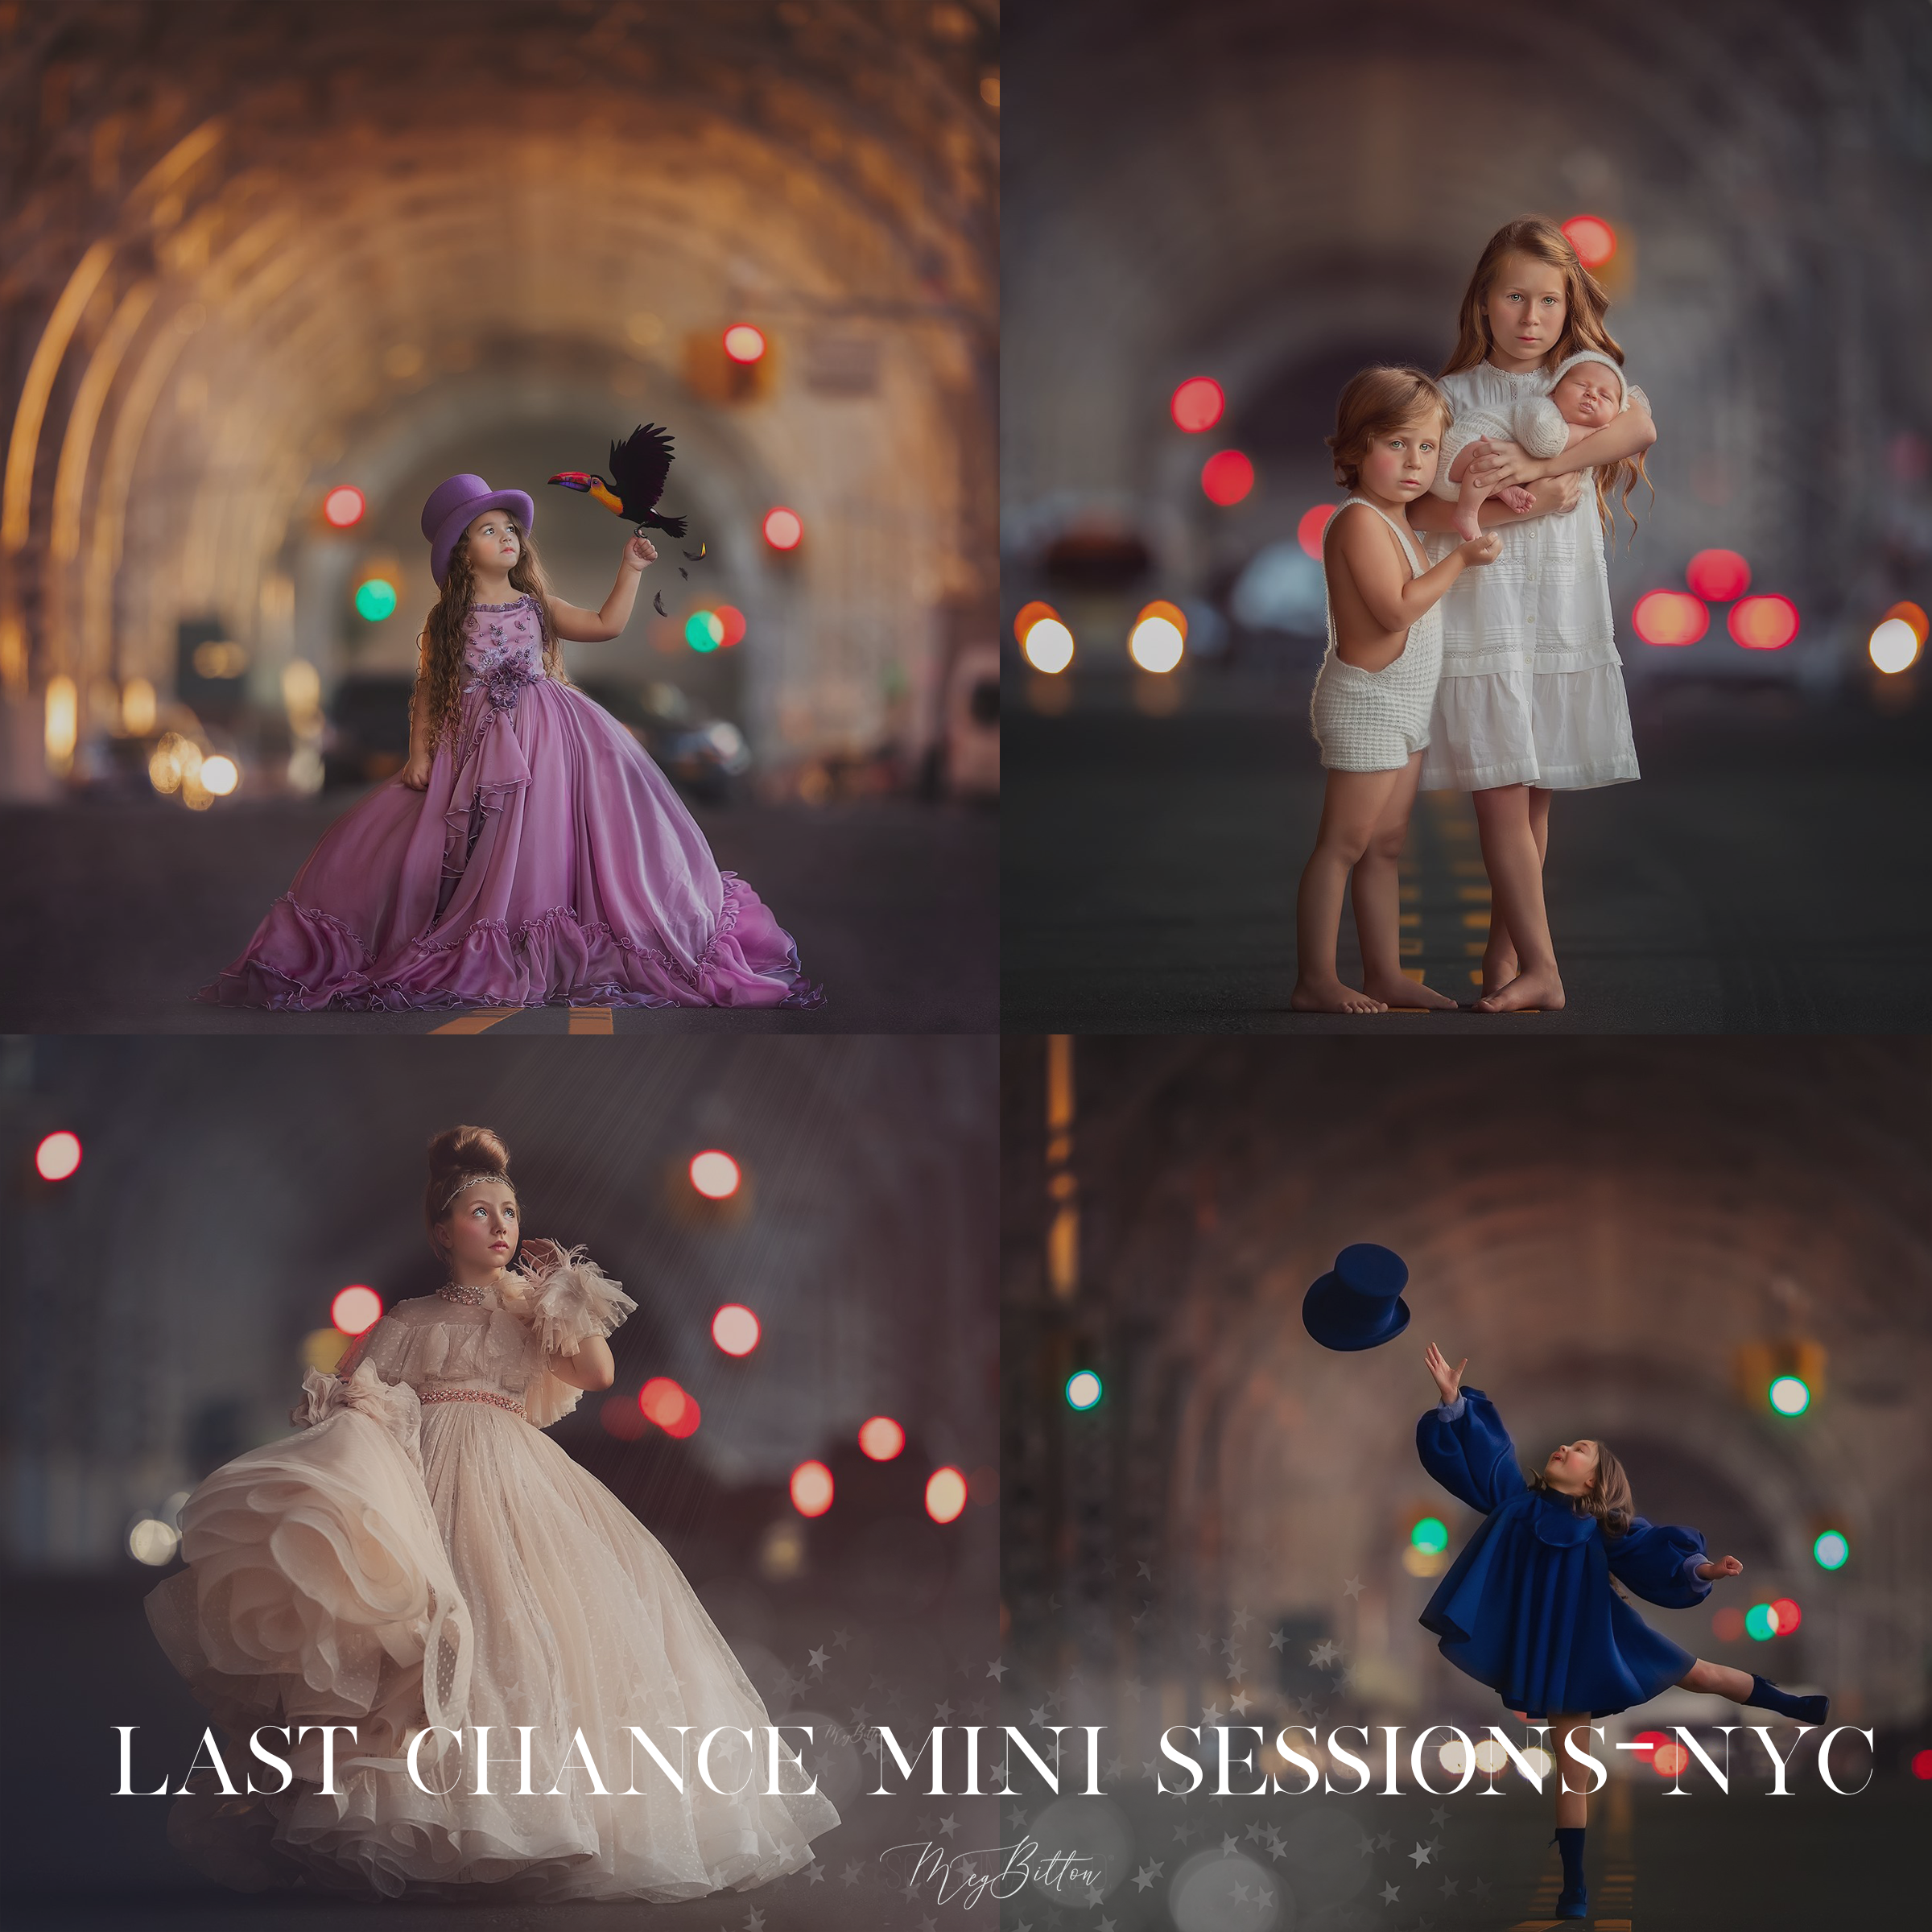 Last Chance Mini Sessions NYC - Meg Bitton Productions